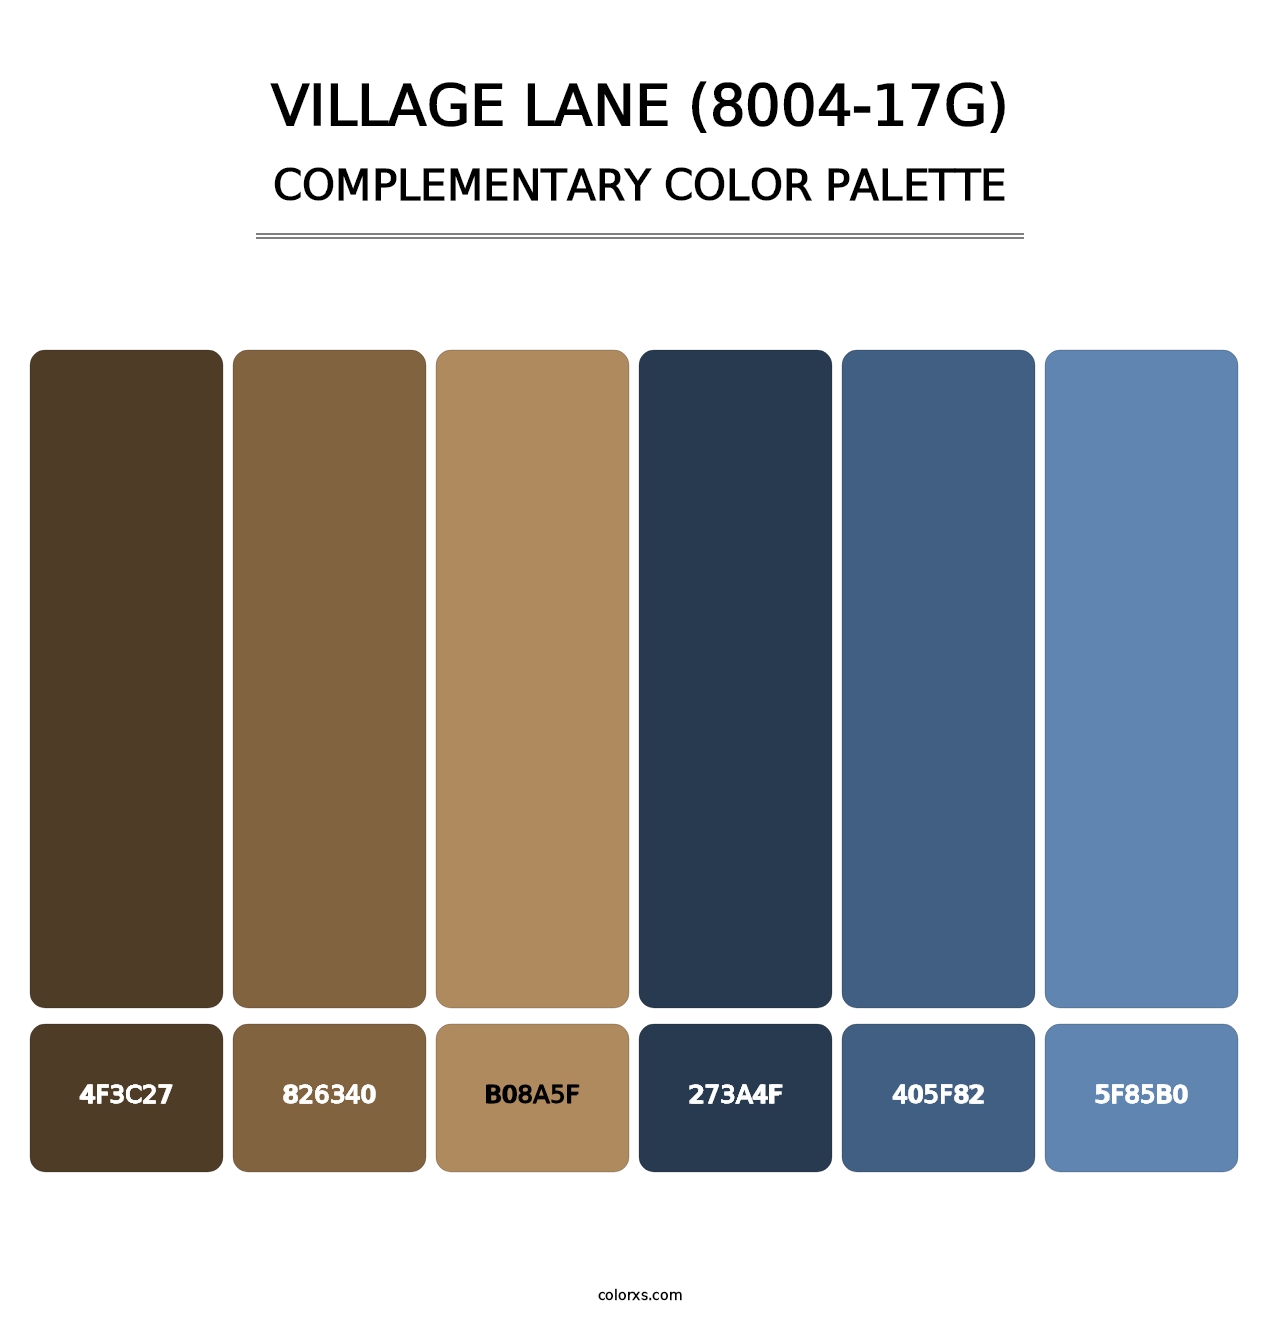 Village Lane (8004-17G) - Complementary Color Palette